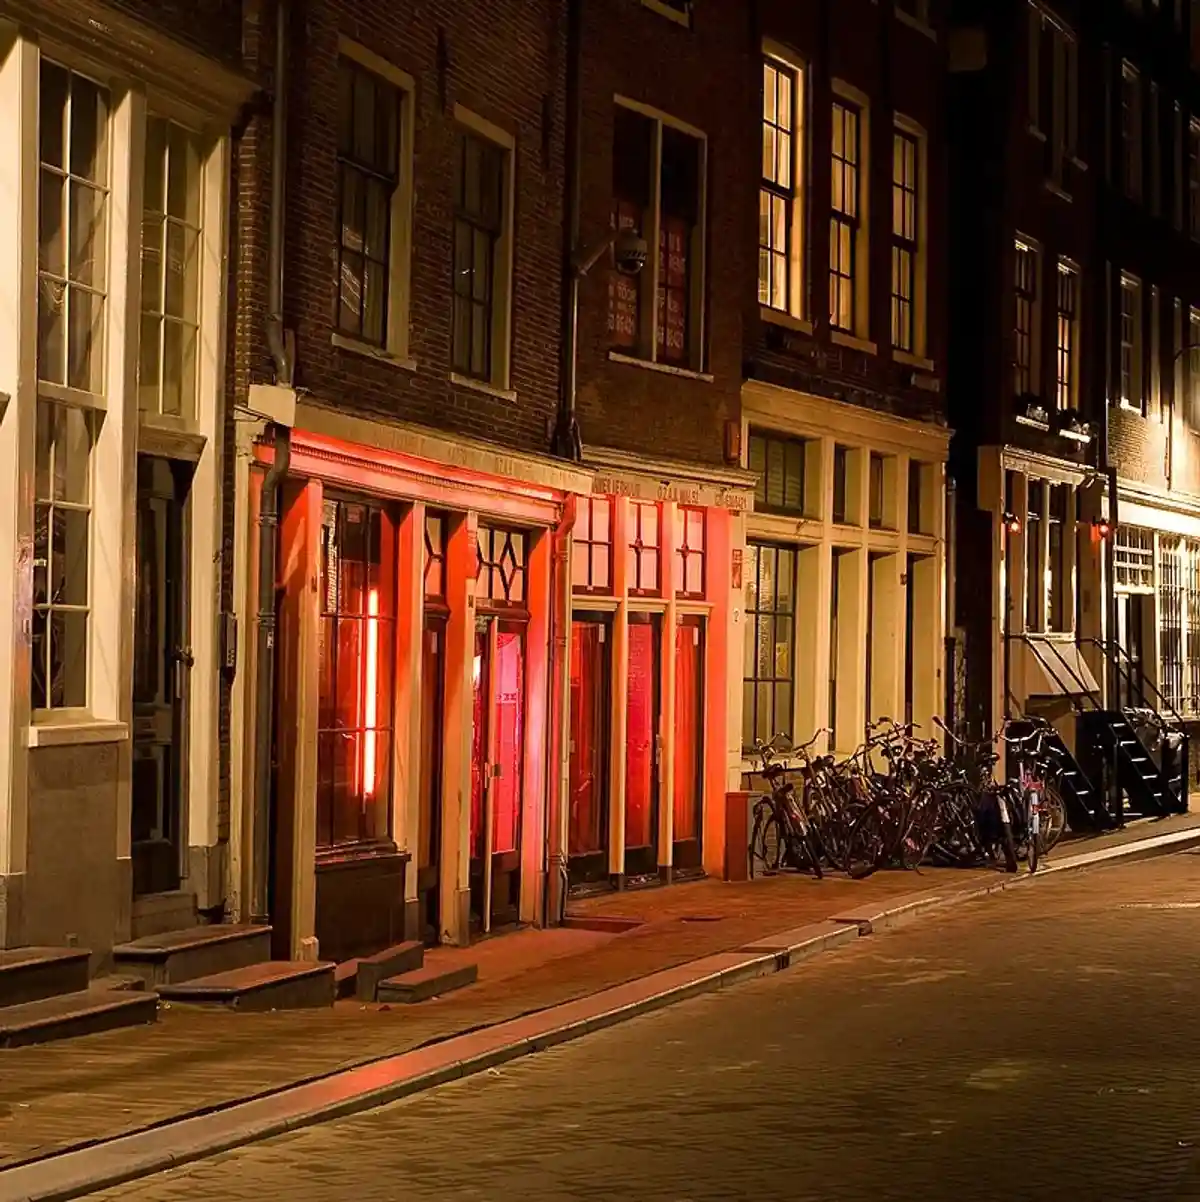 Два борделя на маленькой улочке в районе Красных фонарей Амстердама. Фото: Massimo Catarinella / wikipedia.org